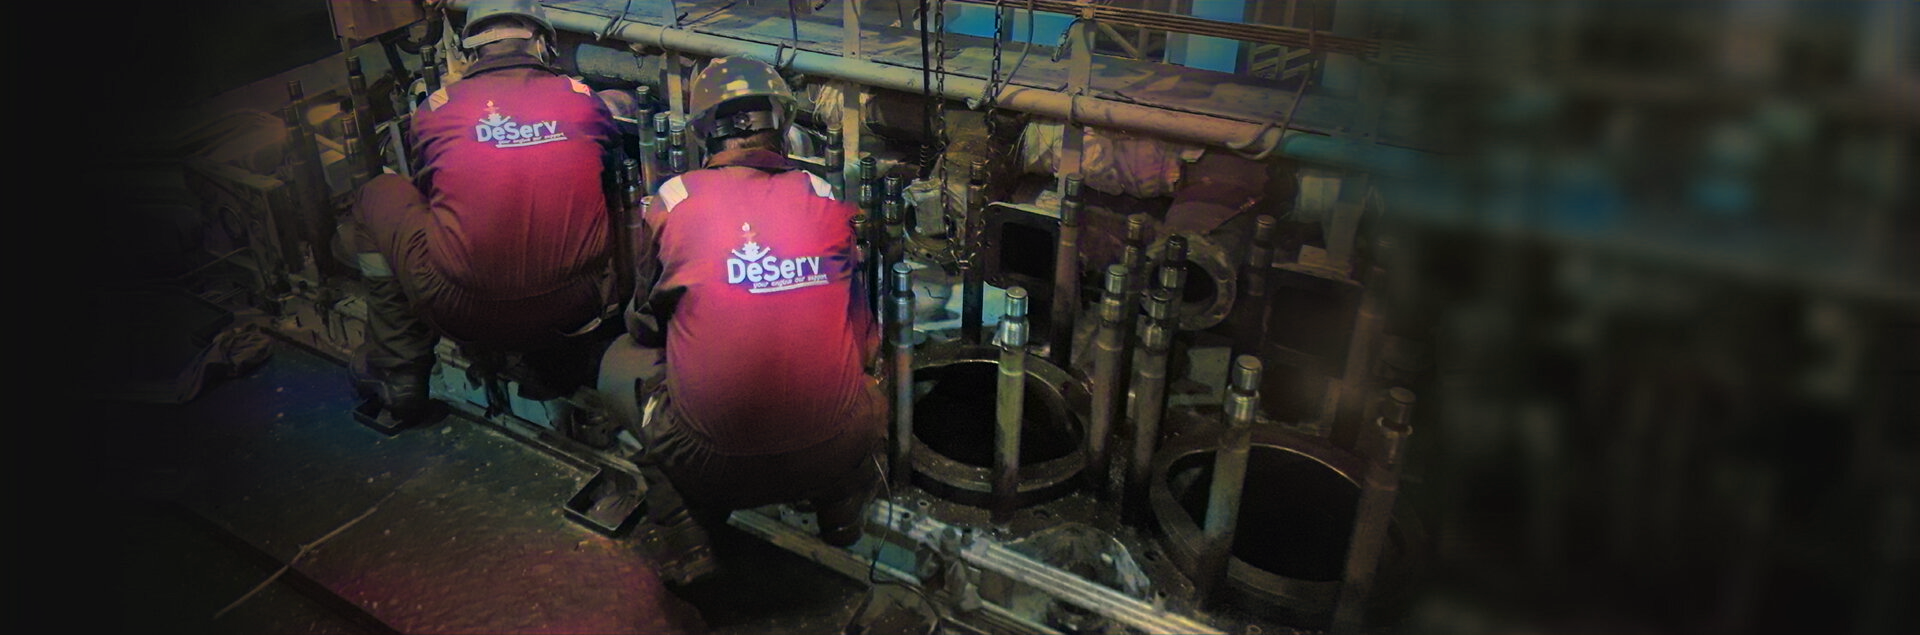 deserv engine maintennace spare parts supply workshops spares reconditions Dubai, UAE